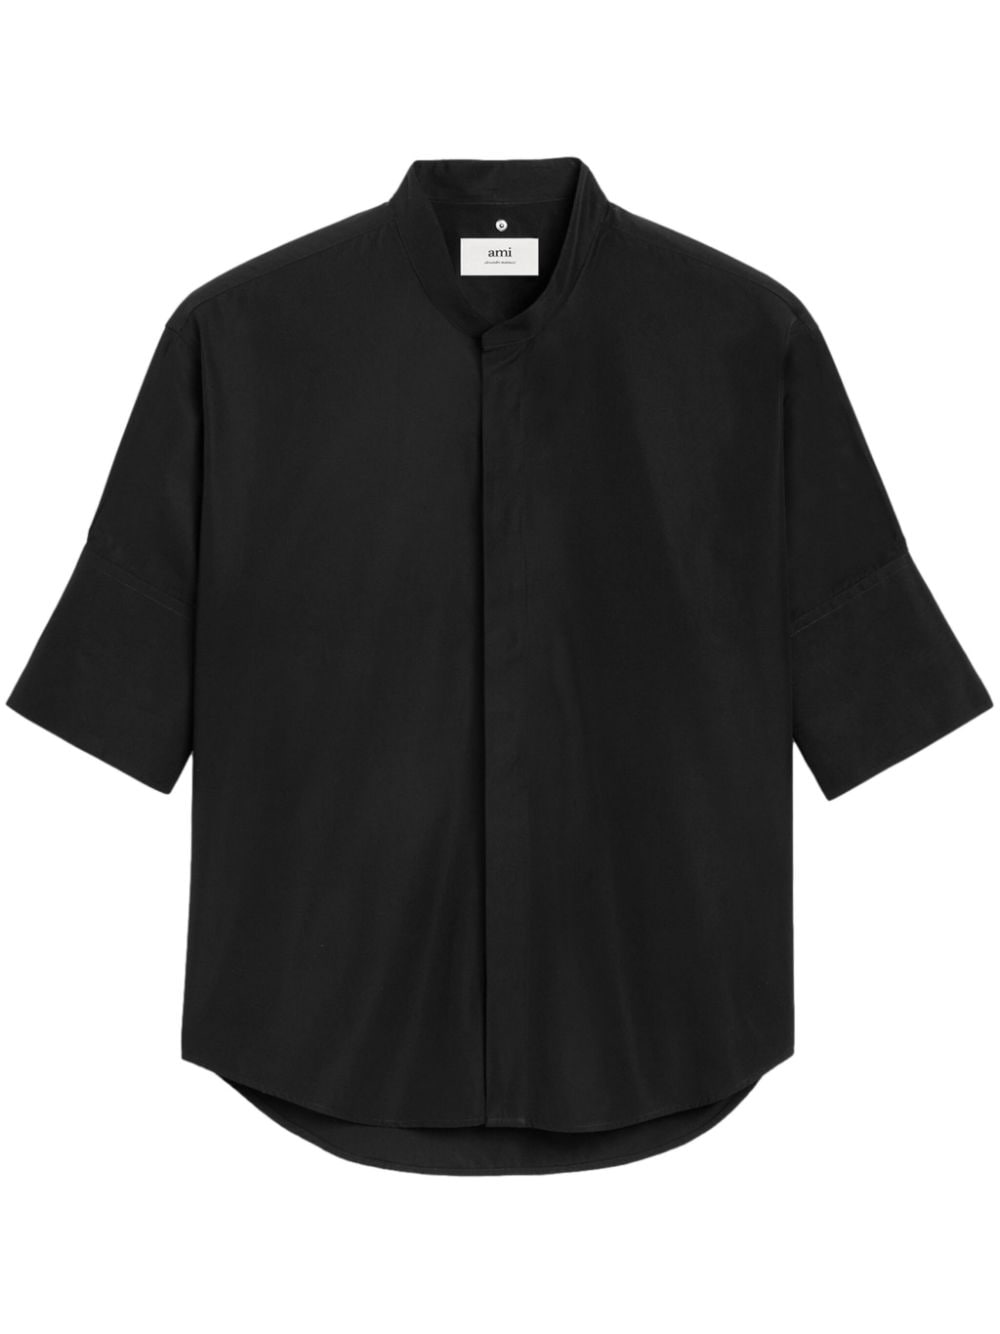 AMI Paris short-sleeve cotton shirt - Black von AMI Paris